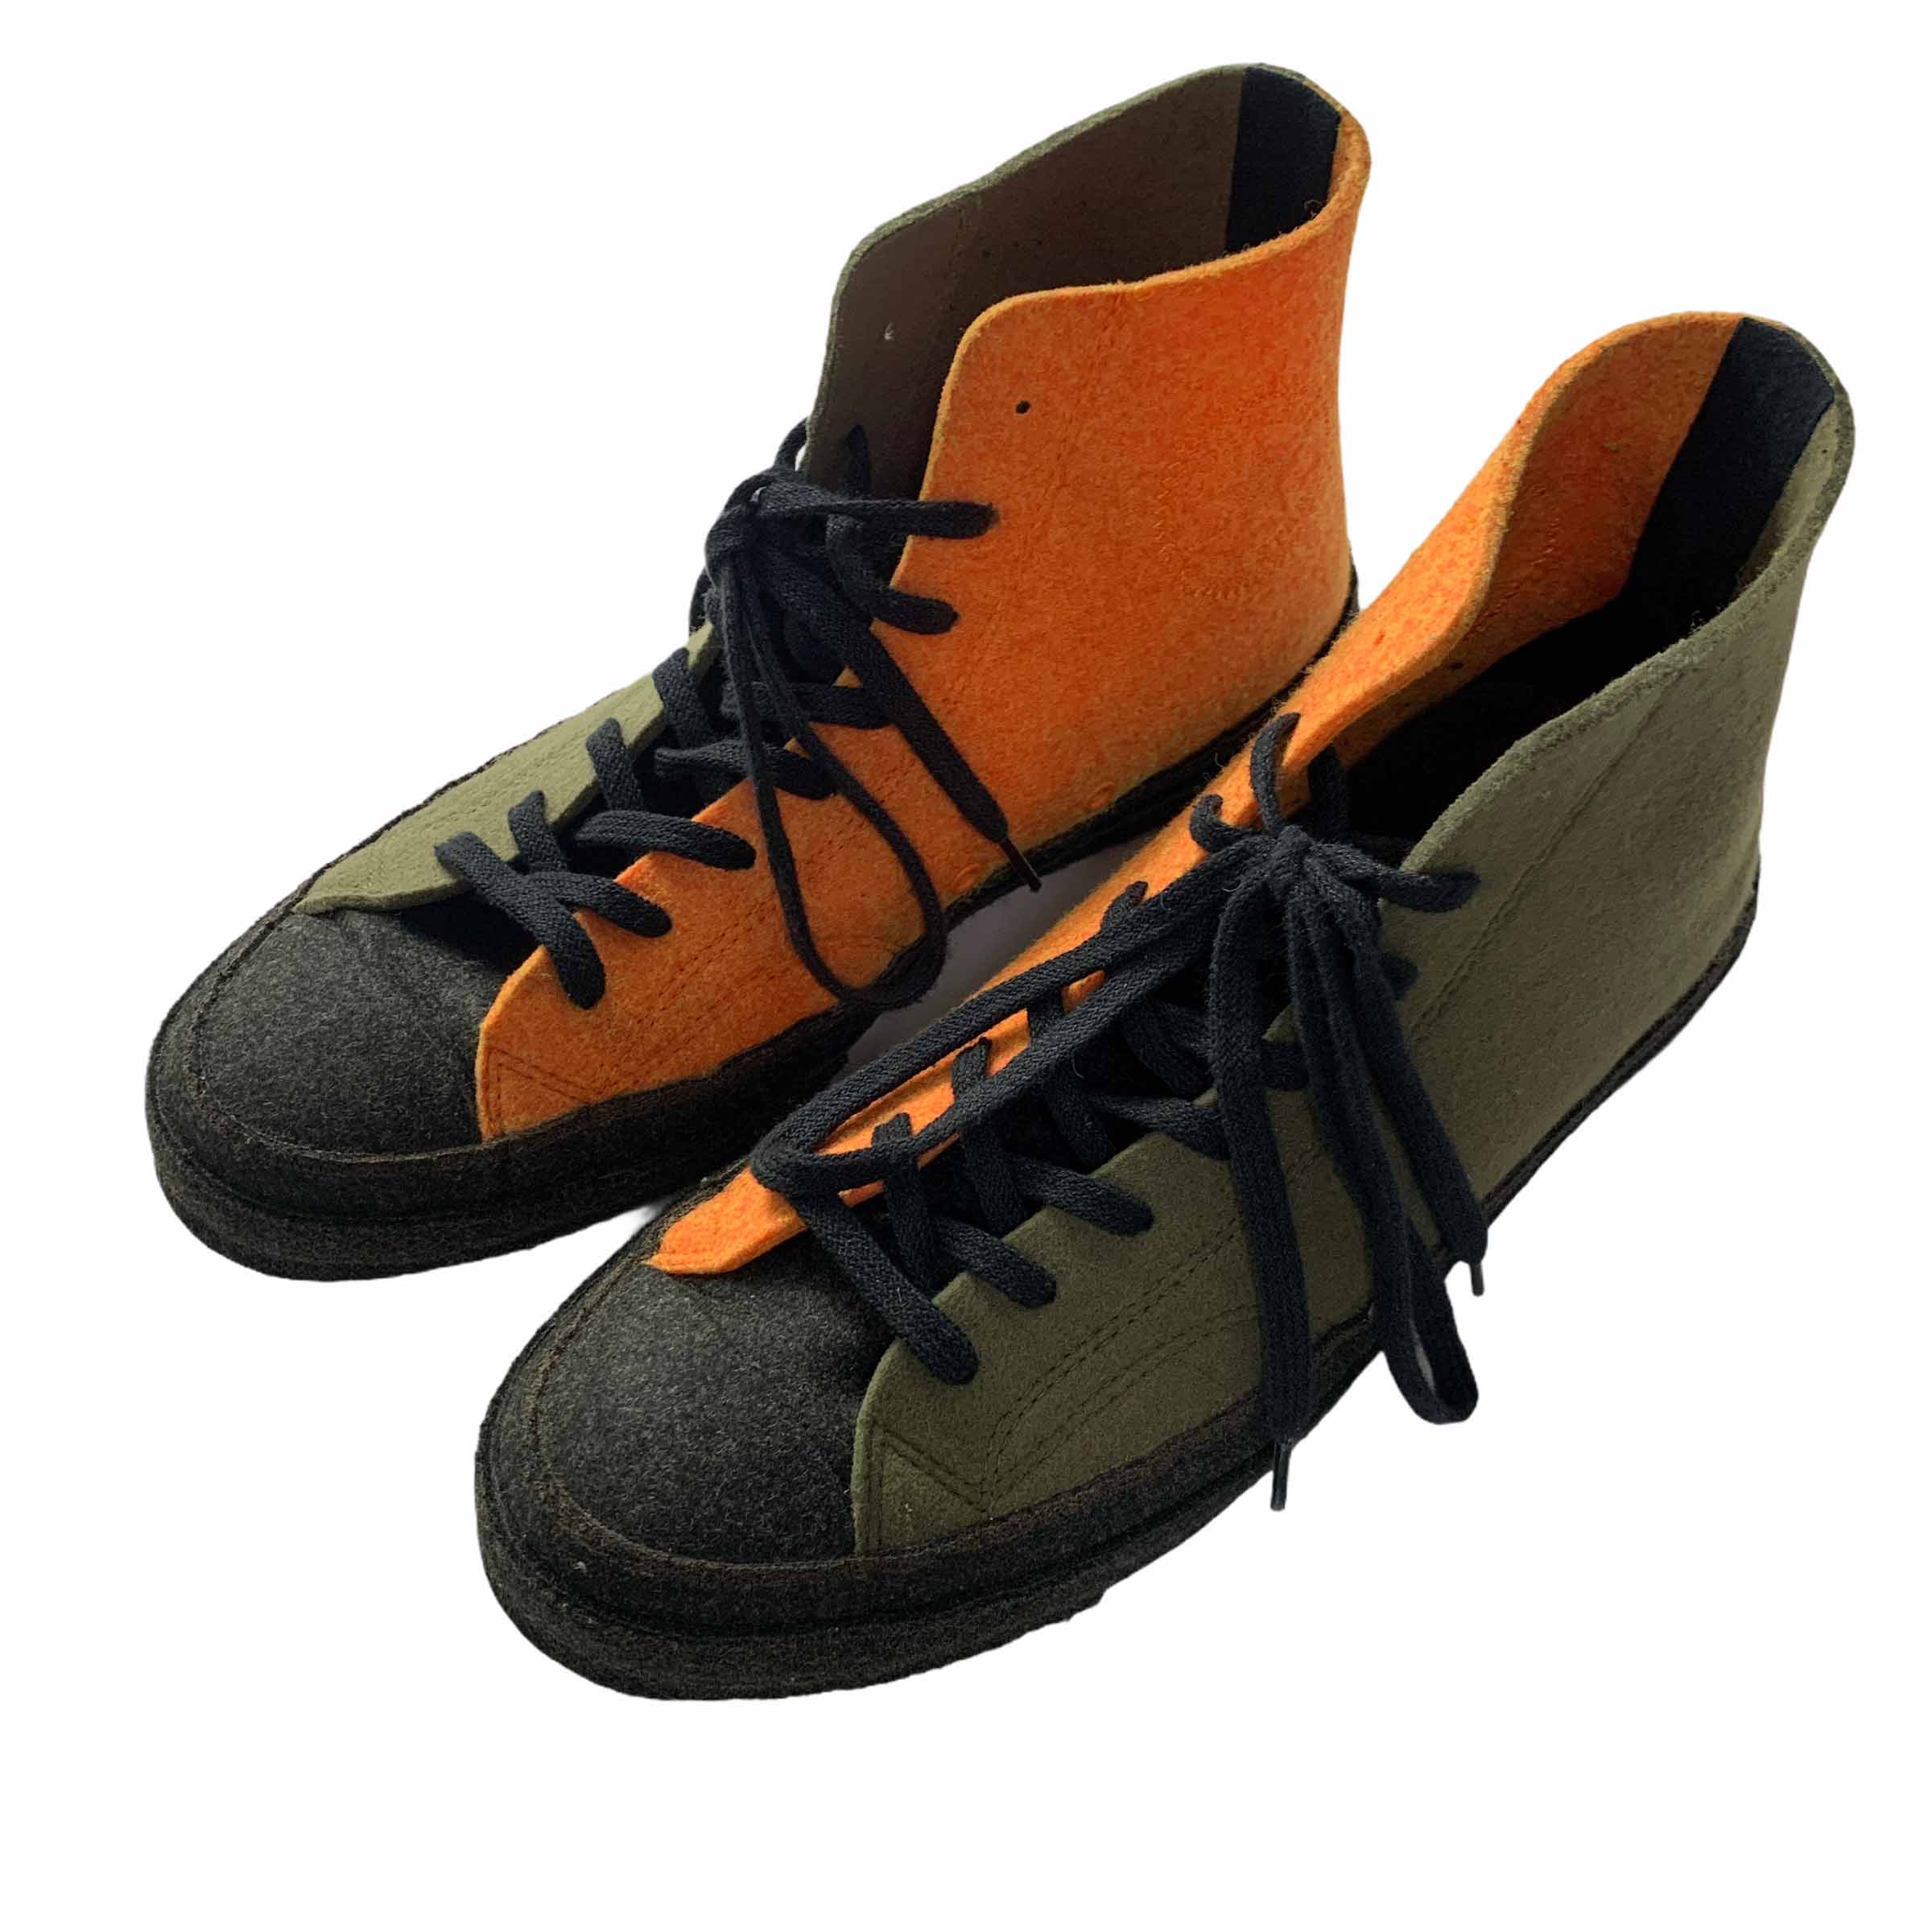 [Converse X J.W Anderson] Shoes - Size 10.5